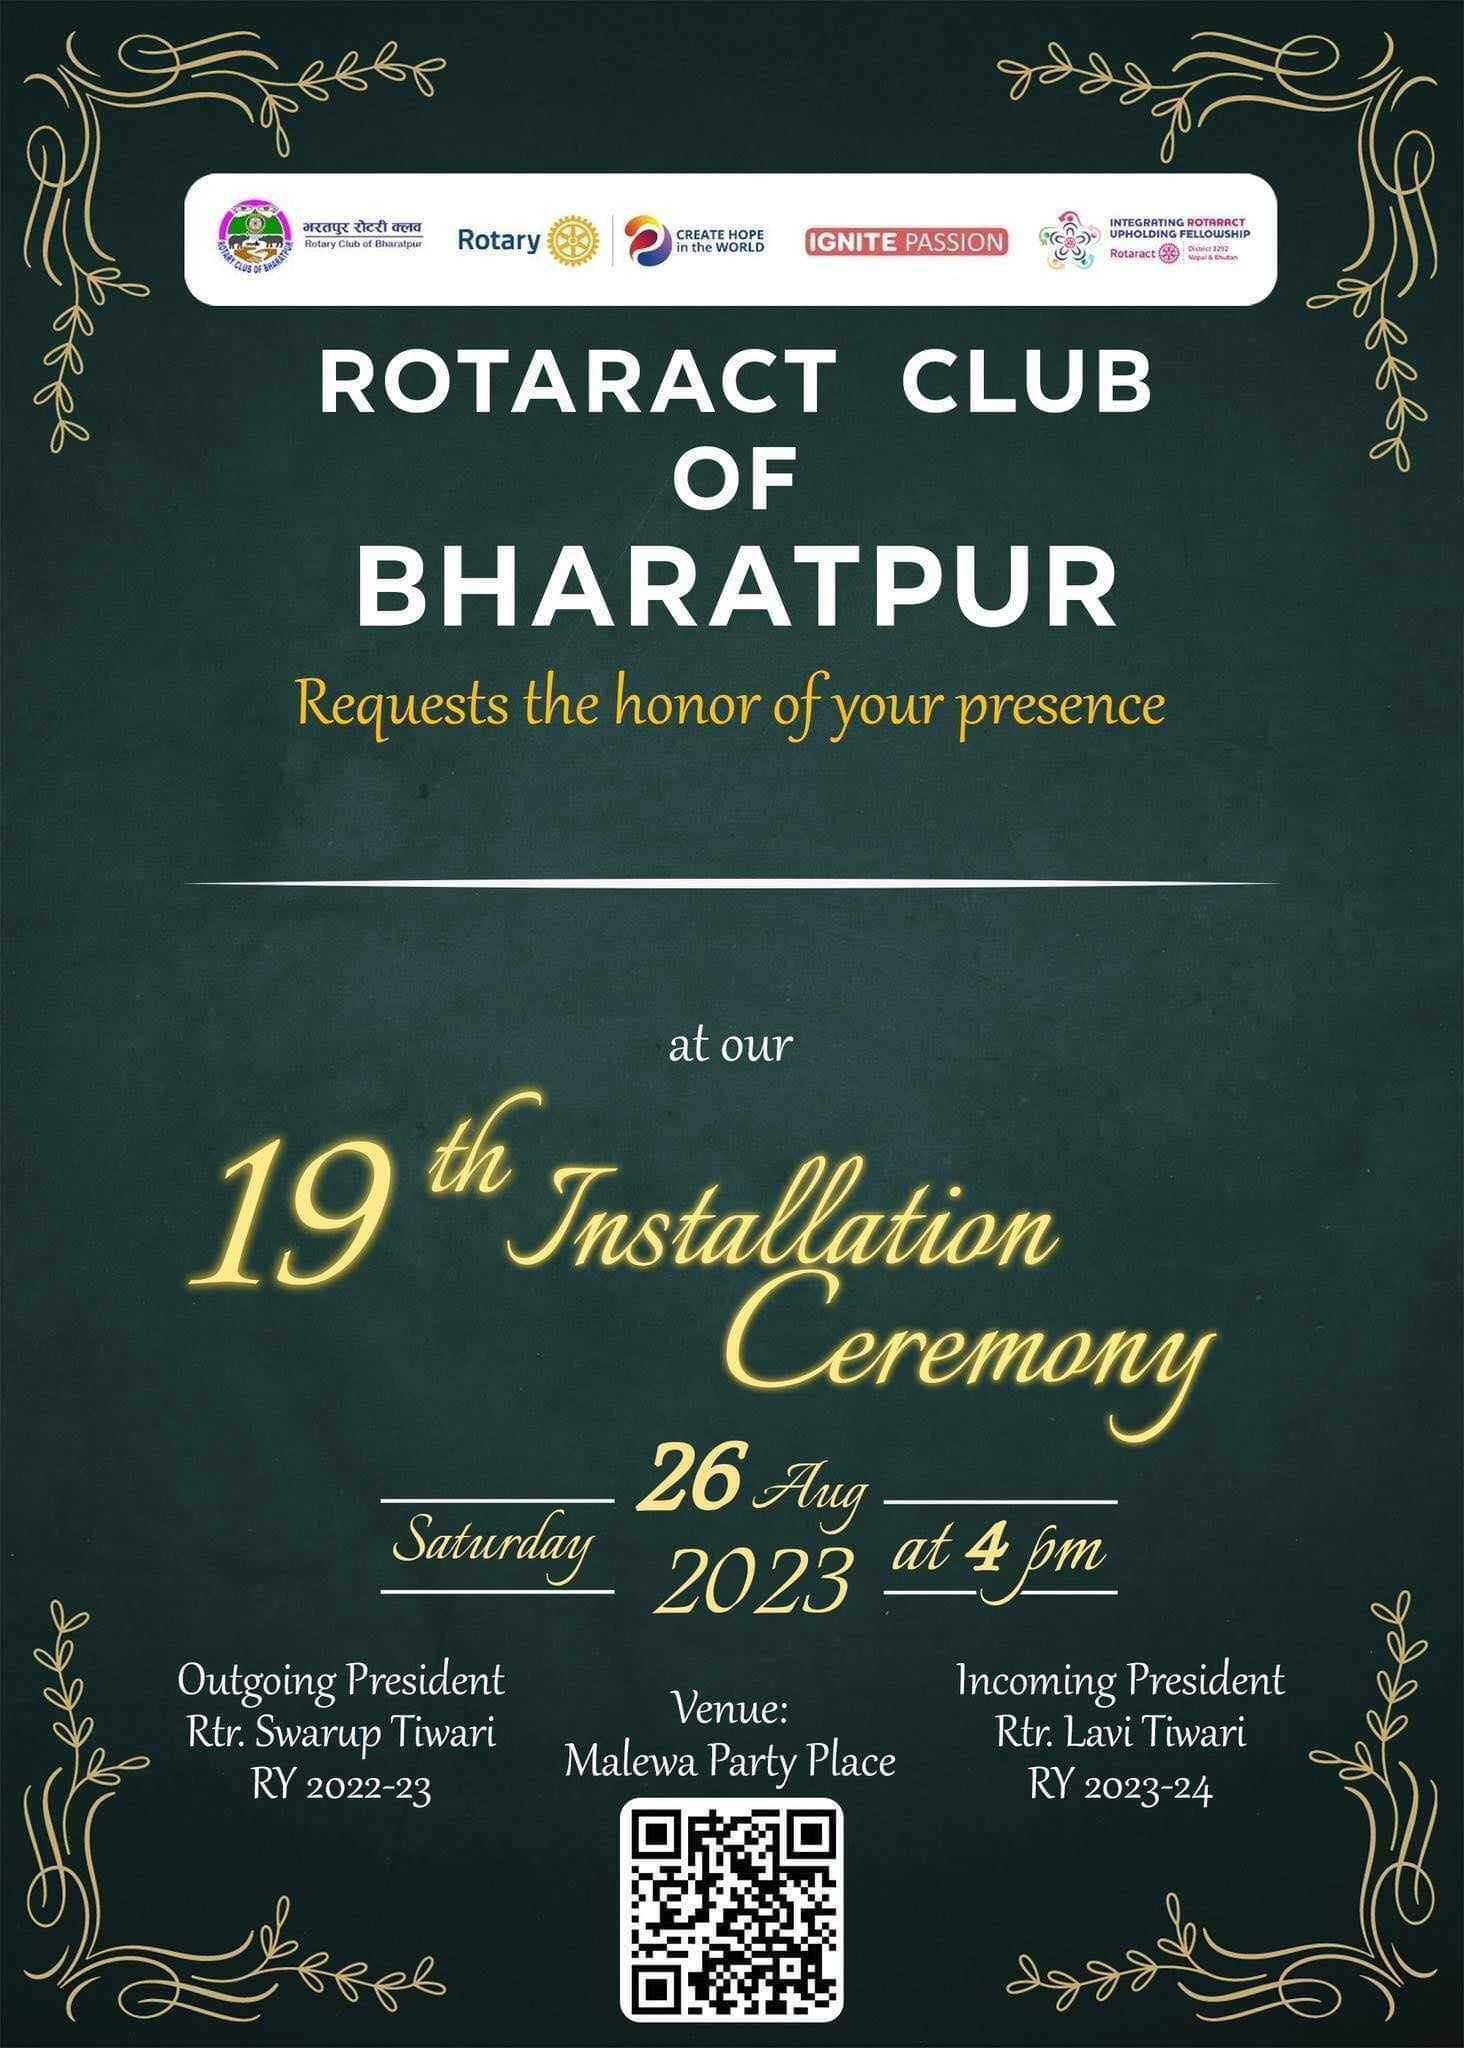 Installation ceremony of Rotaract club of Bharatpur